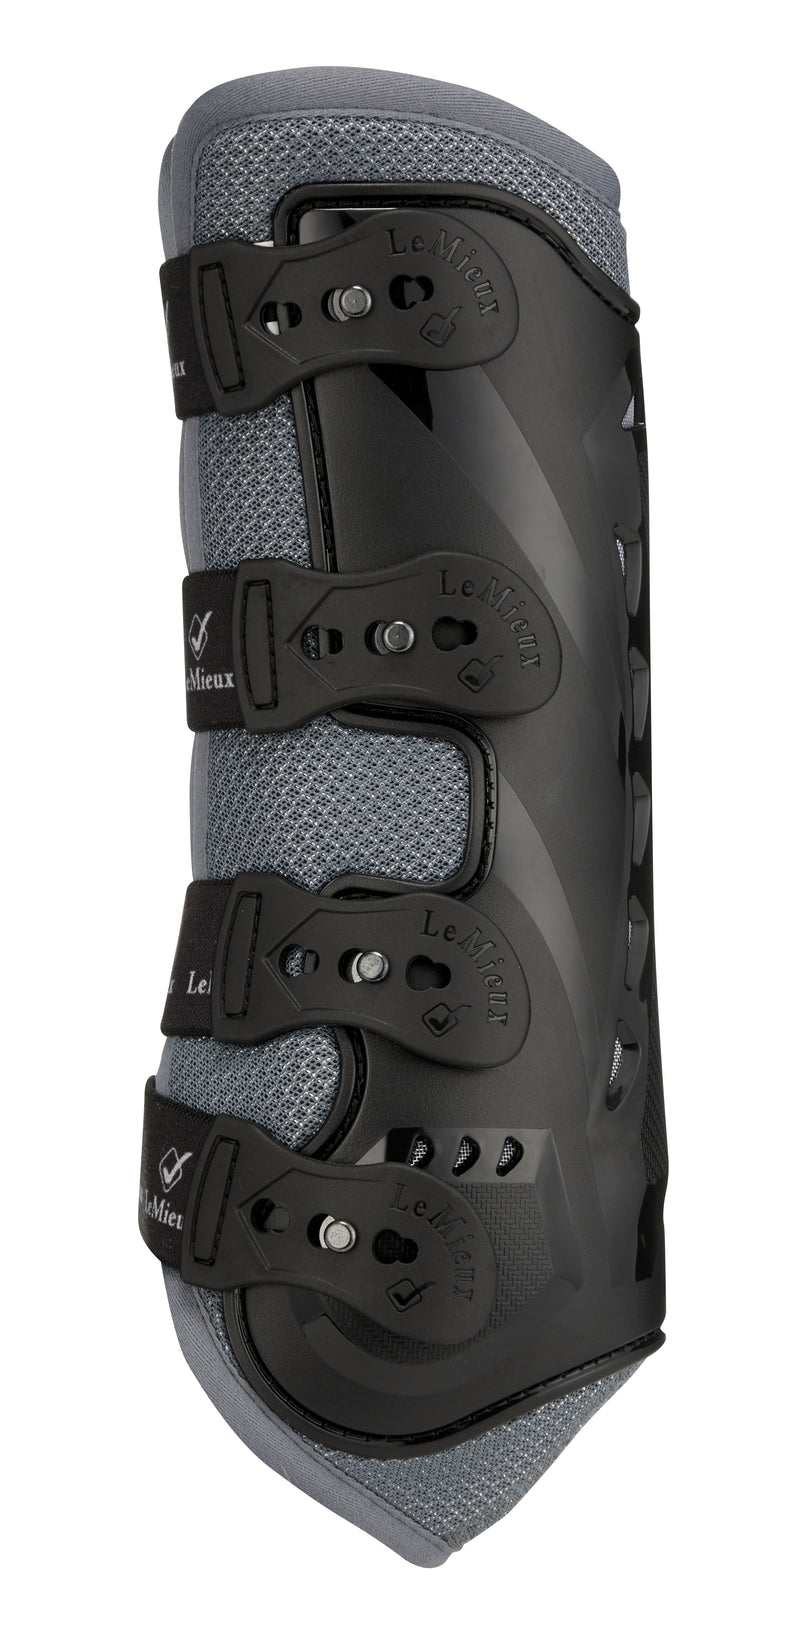 LeMieux Ultramesh Snug Boots Grey - Nags Essentials